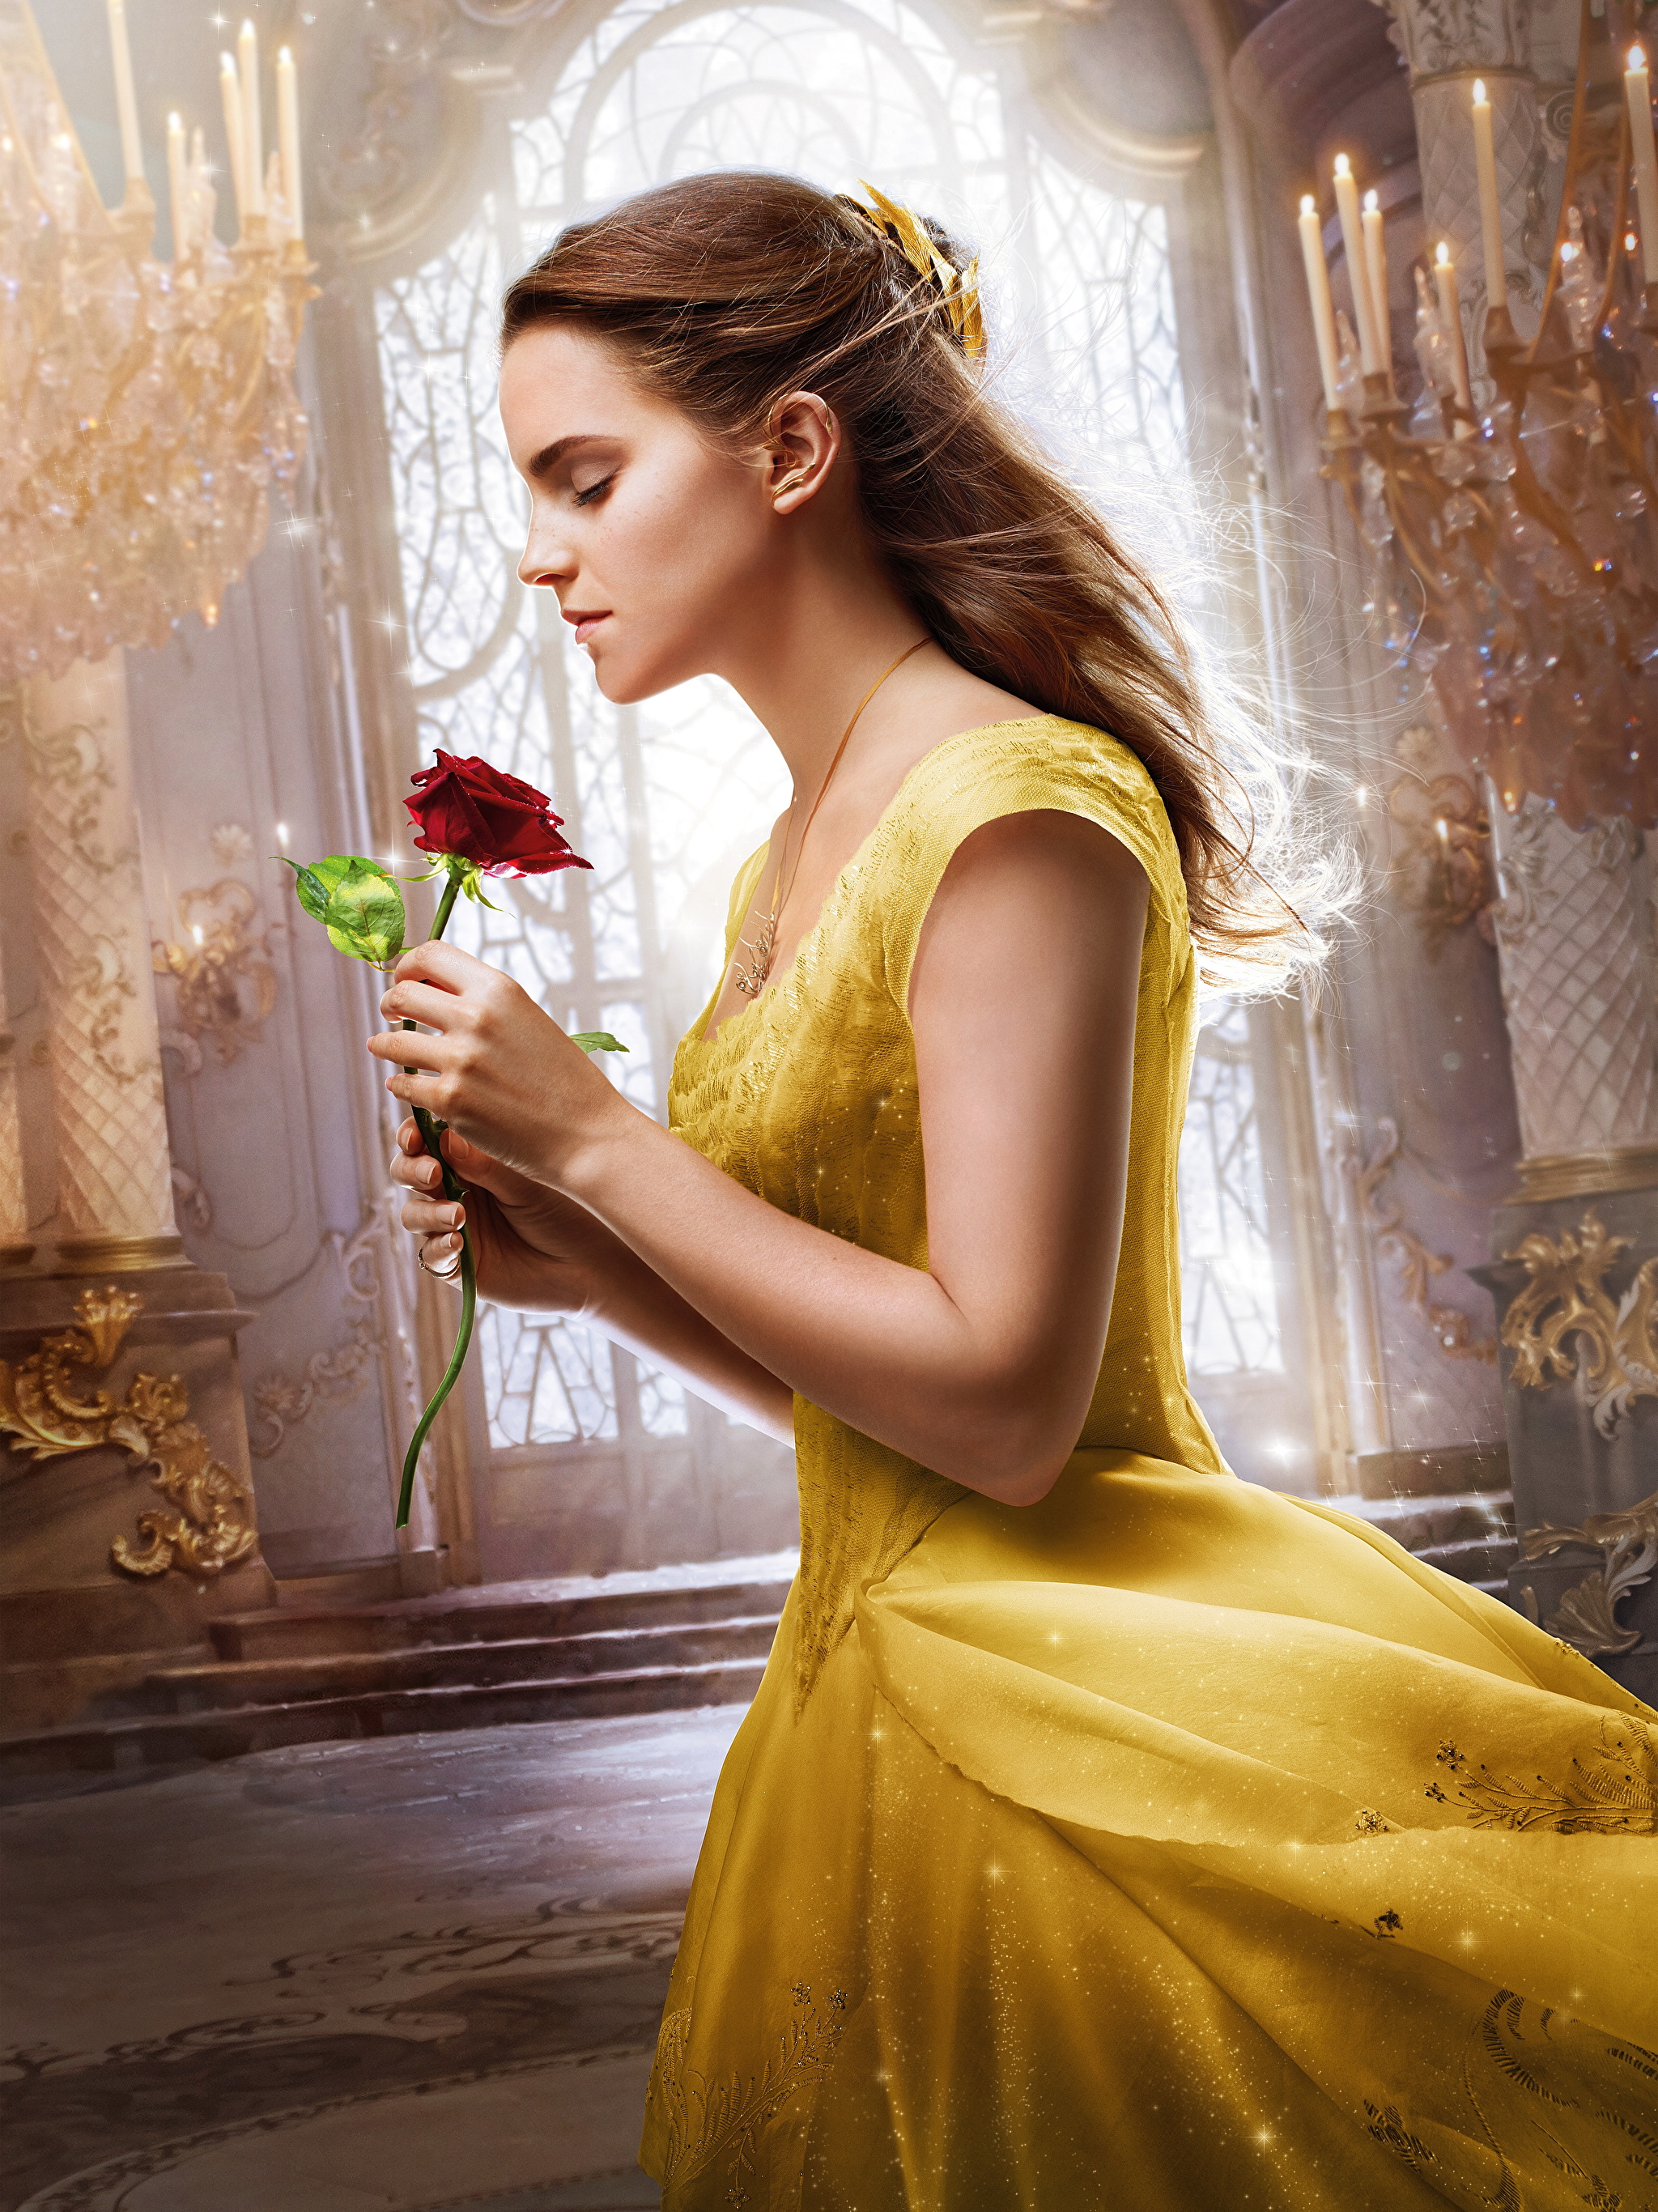 Image Beauty And The Beast Emma Watson Girls Roses